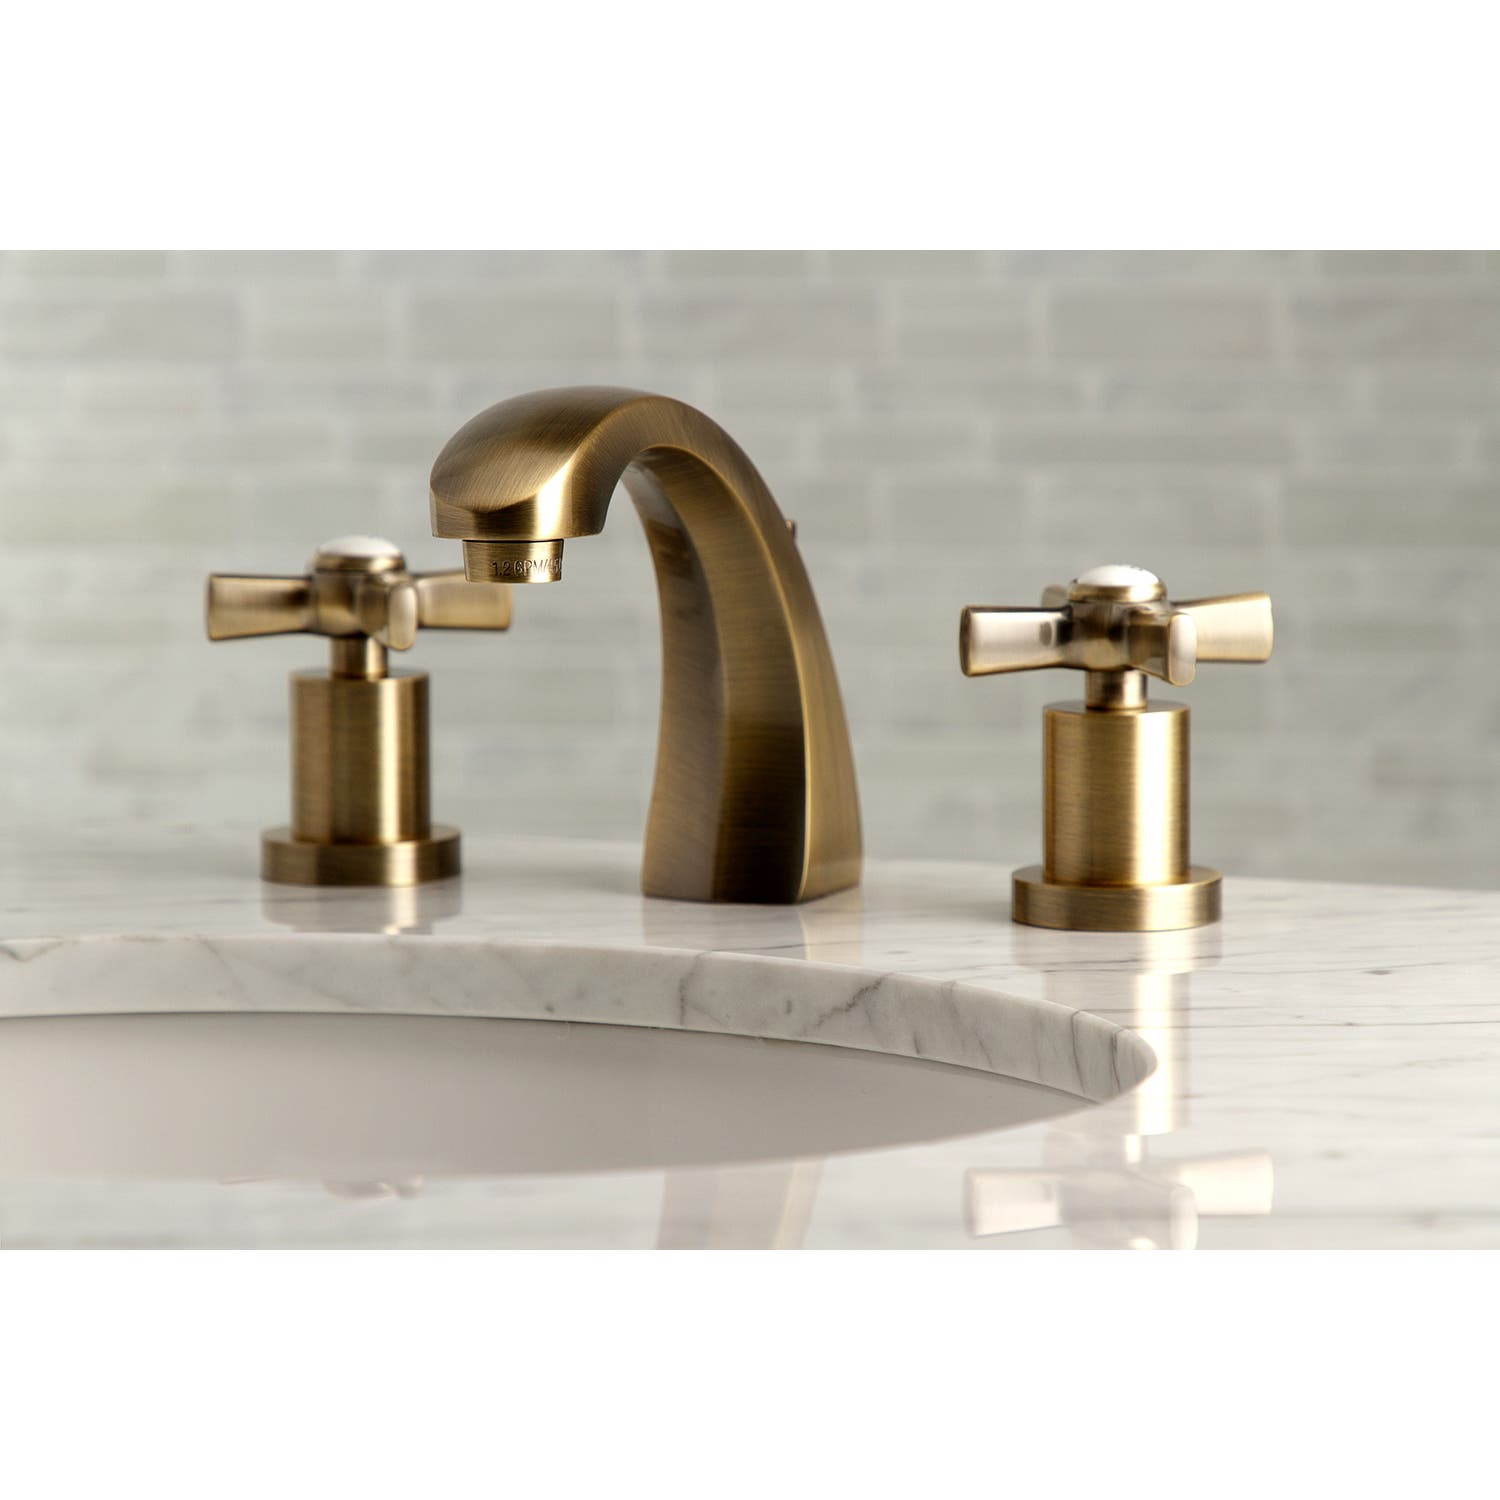 Vintage Brass Widespread Bathroom Faucet Feature: KS4983ZX